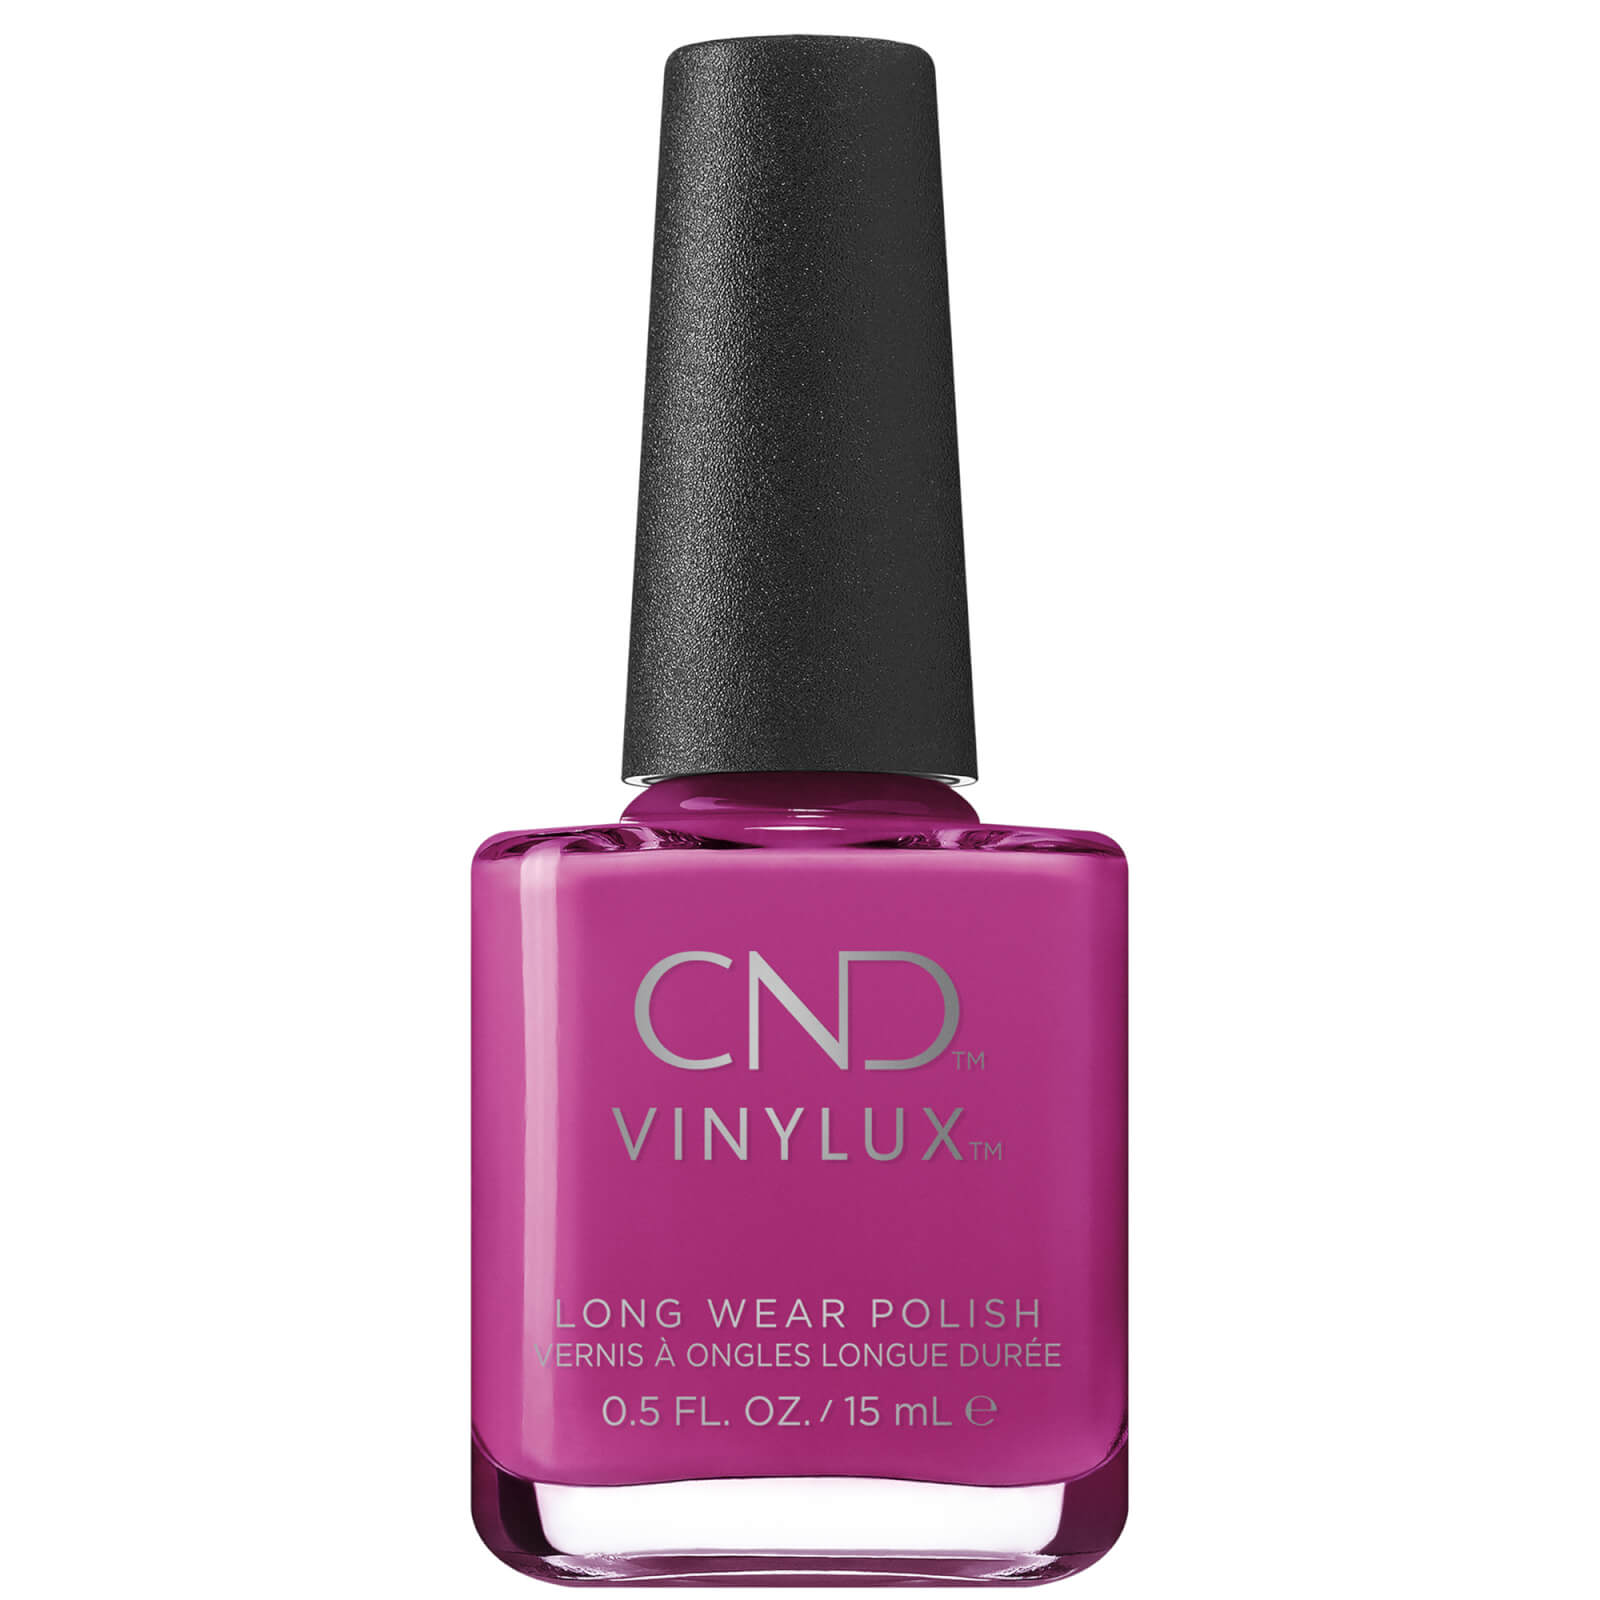 CND Vinylux Nail Varnish – Violet Rays lookfantastic.com imagine